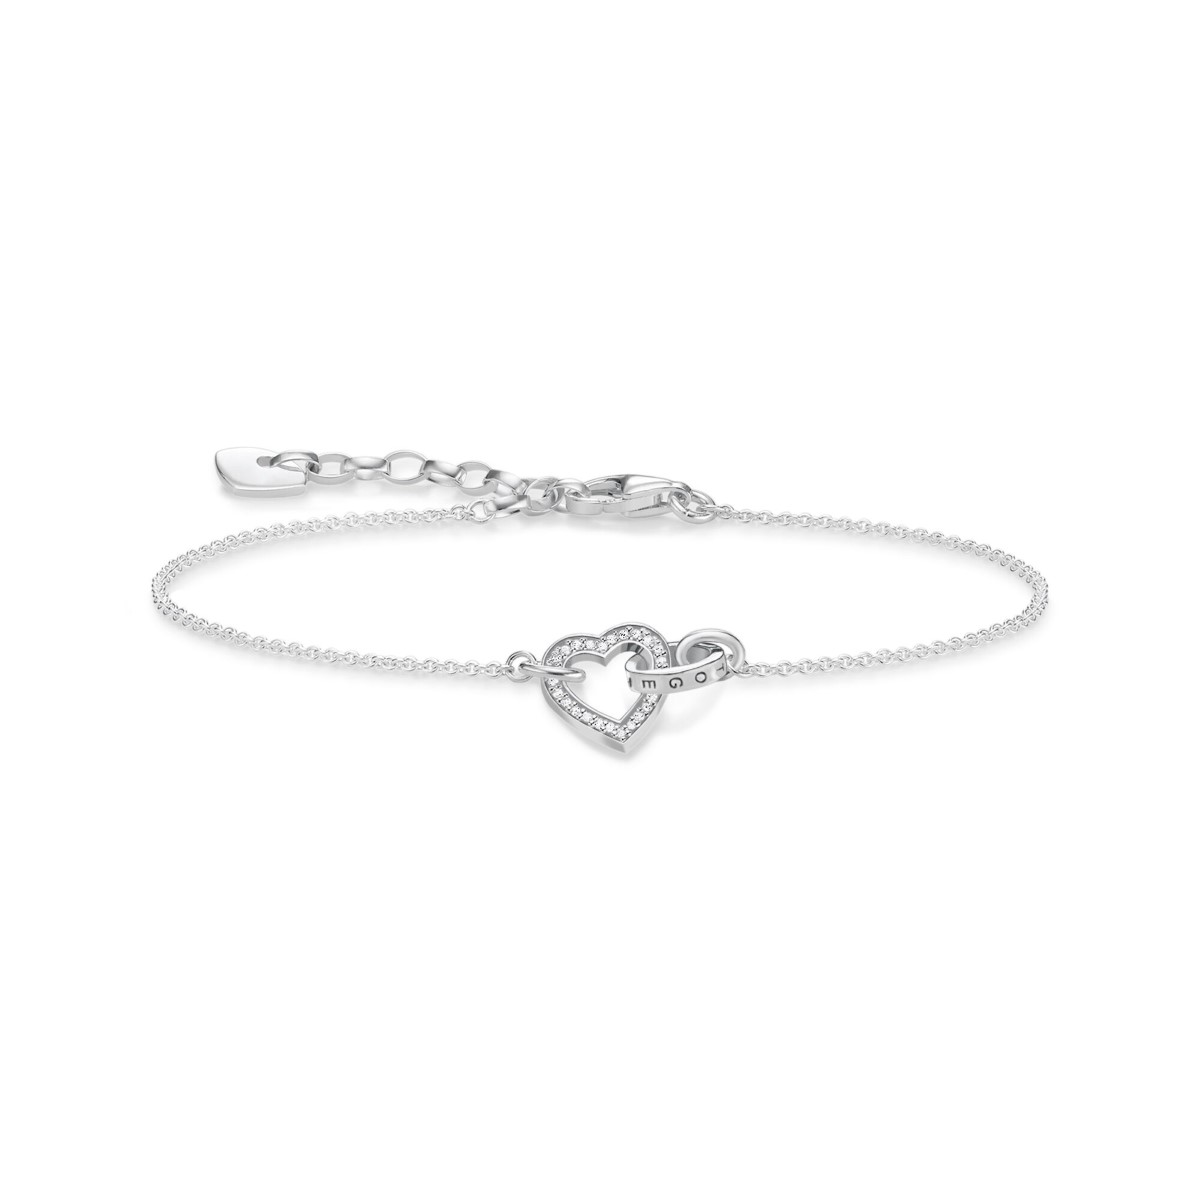 Thomas Sabo Together Heart Bracelet - Silver A1648-051-14